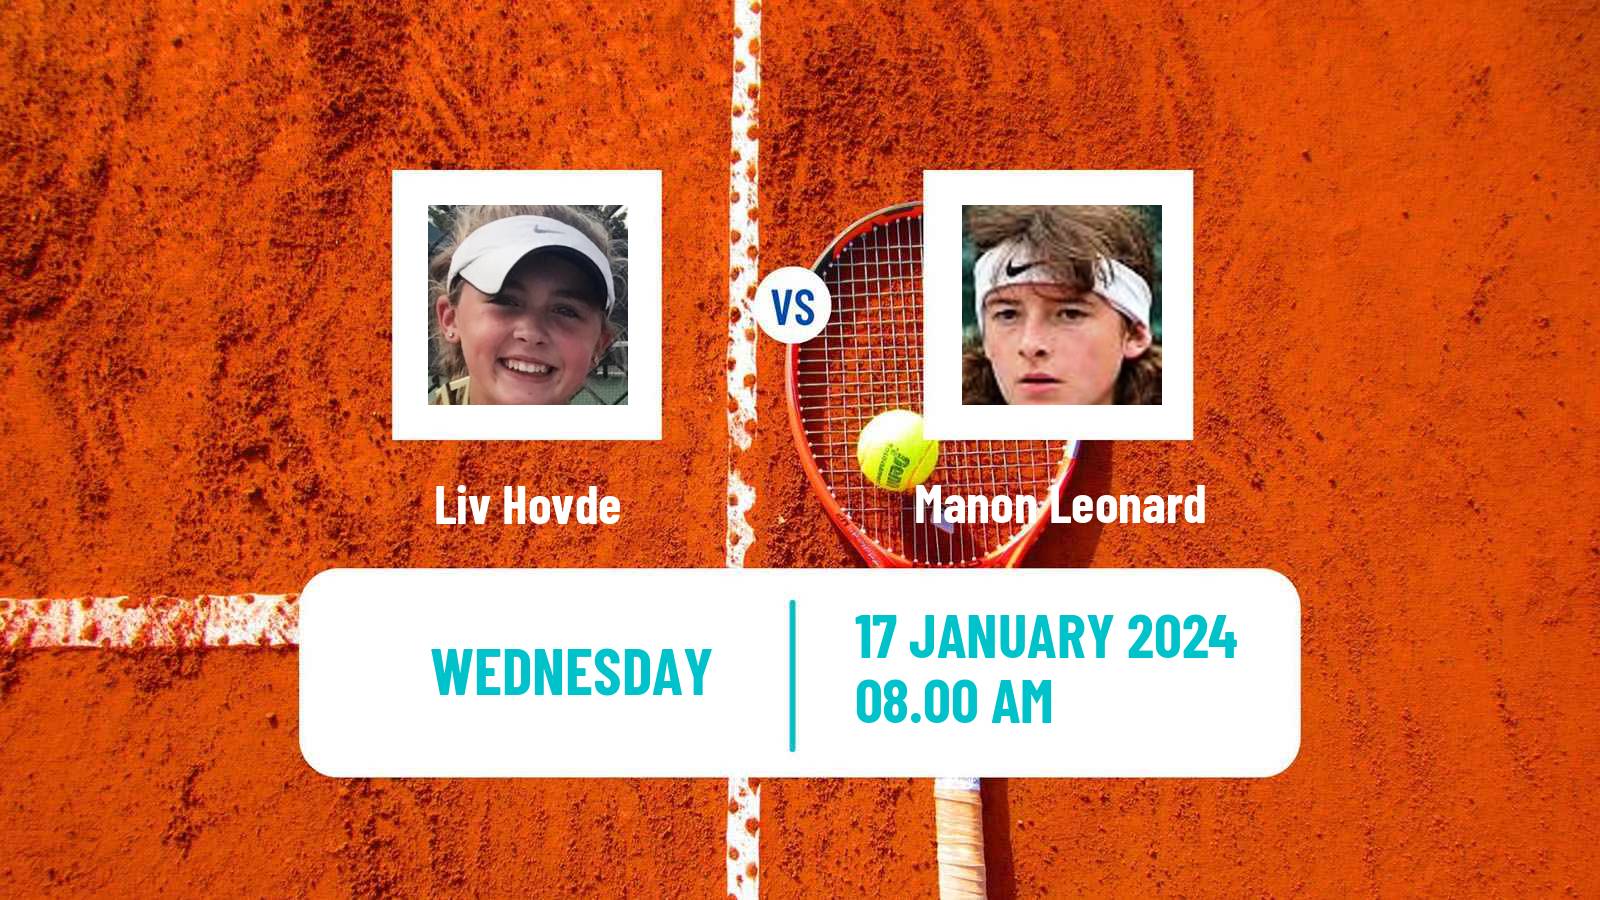 Tennis ITF W35 Sunderland Women Liv Hovde - Manon Leonard